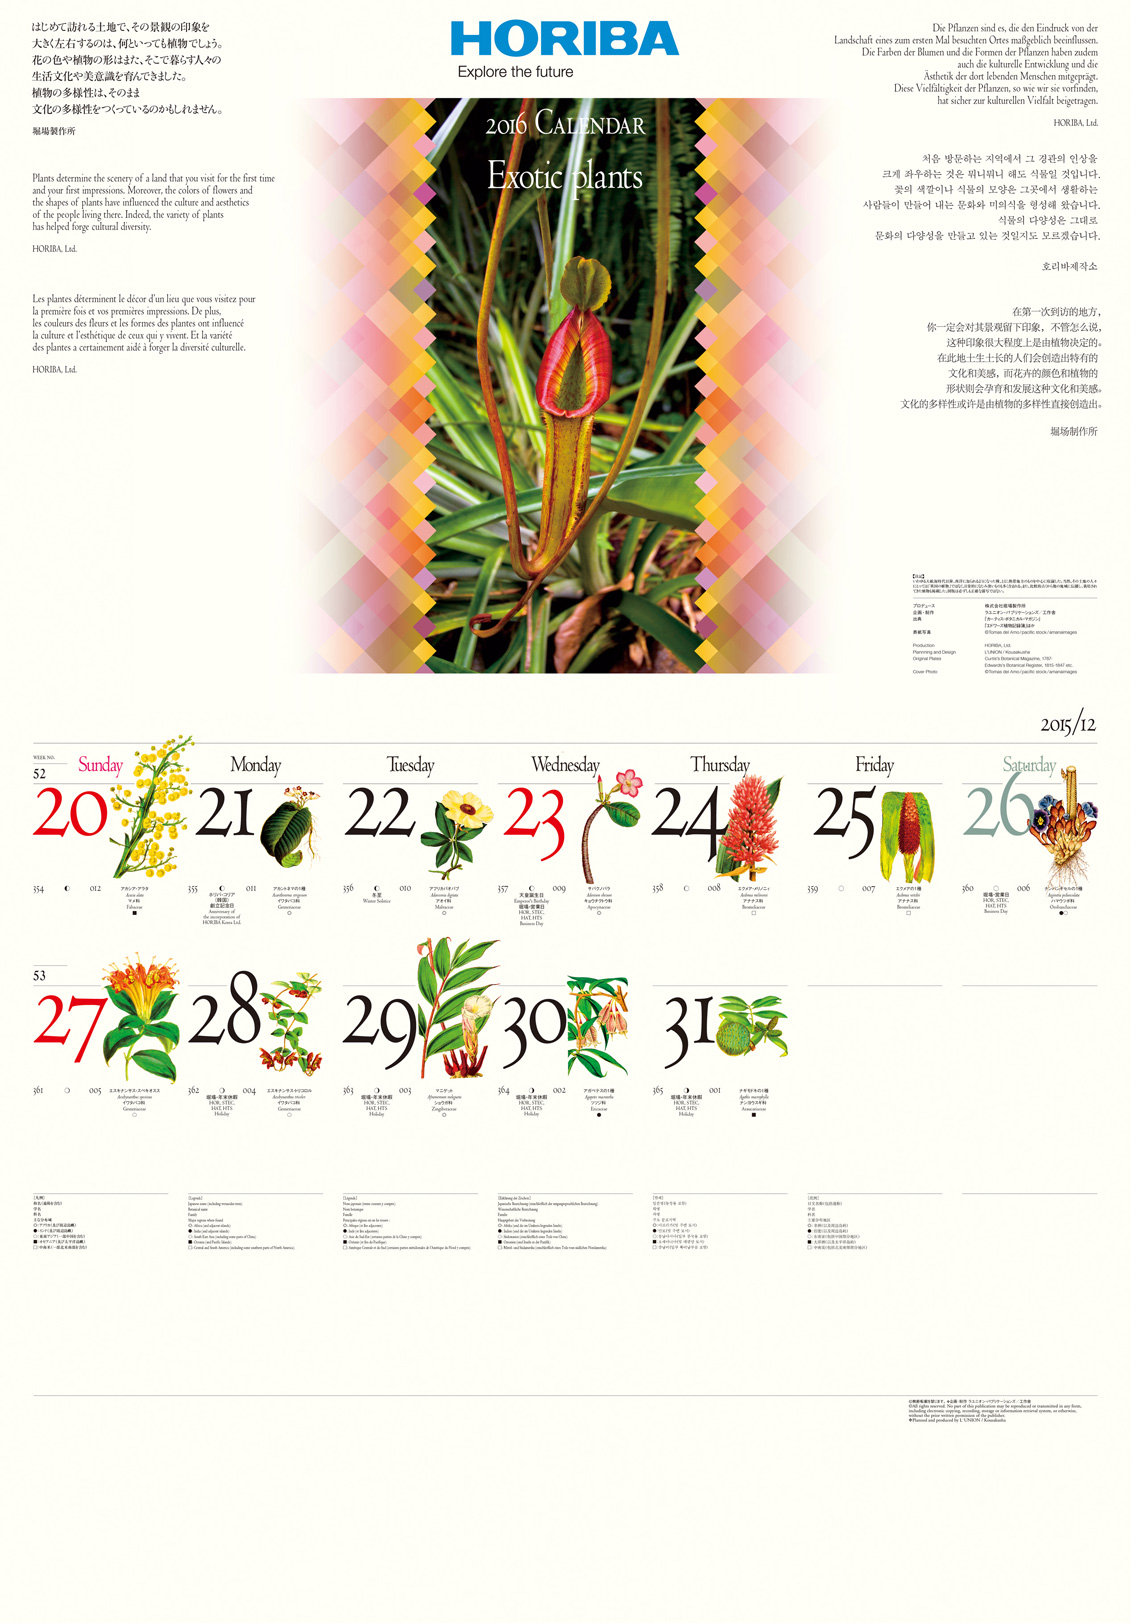 HORIBA Calendar 2016